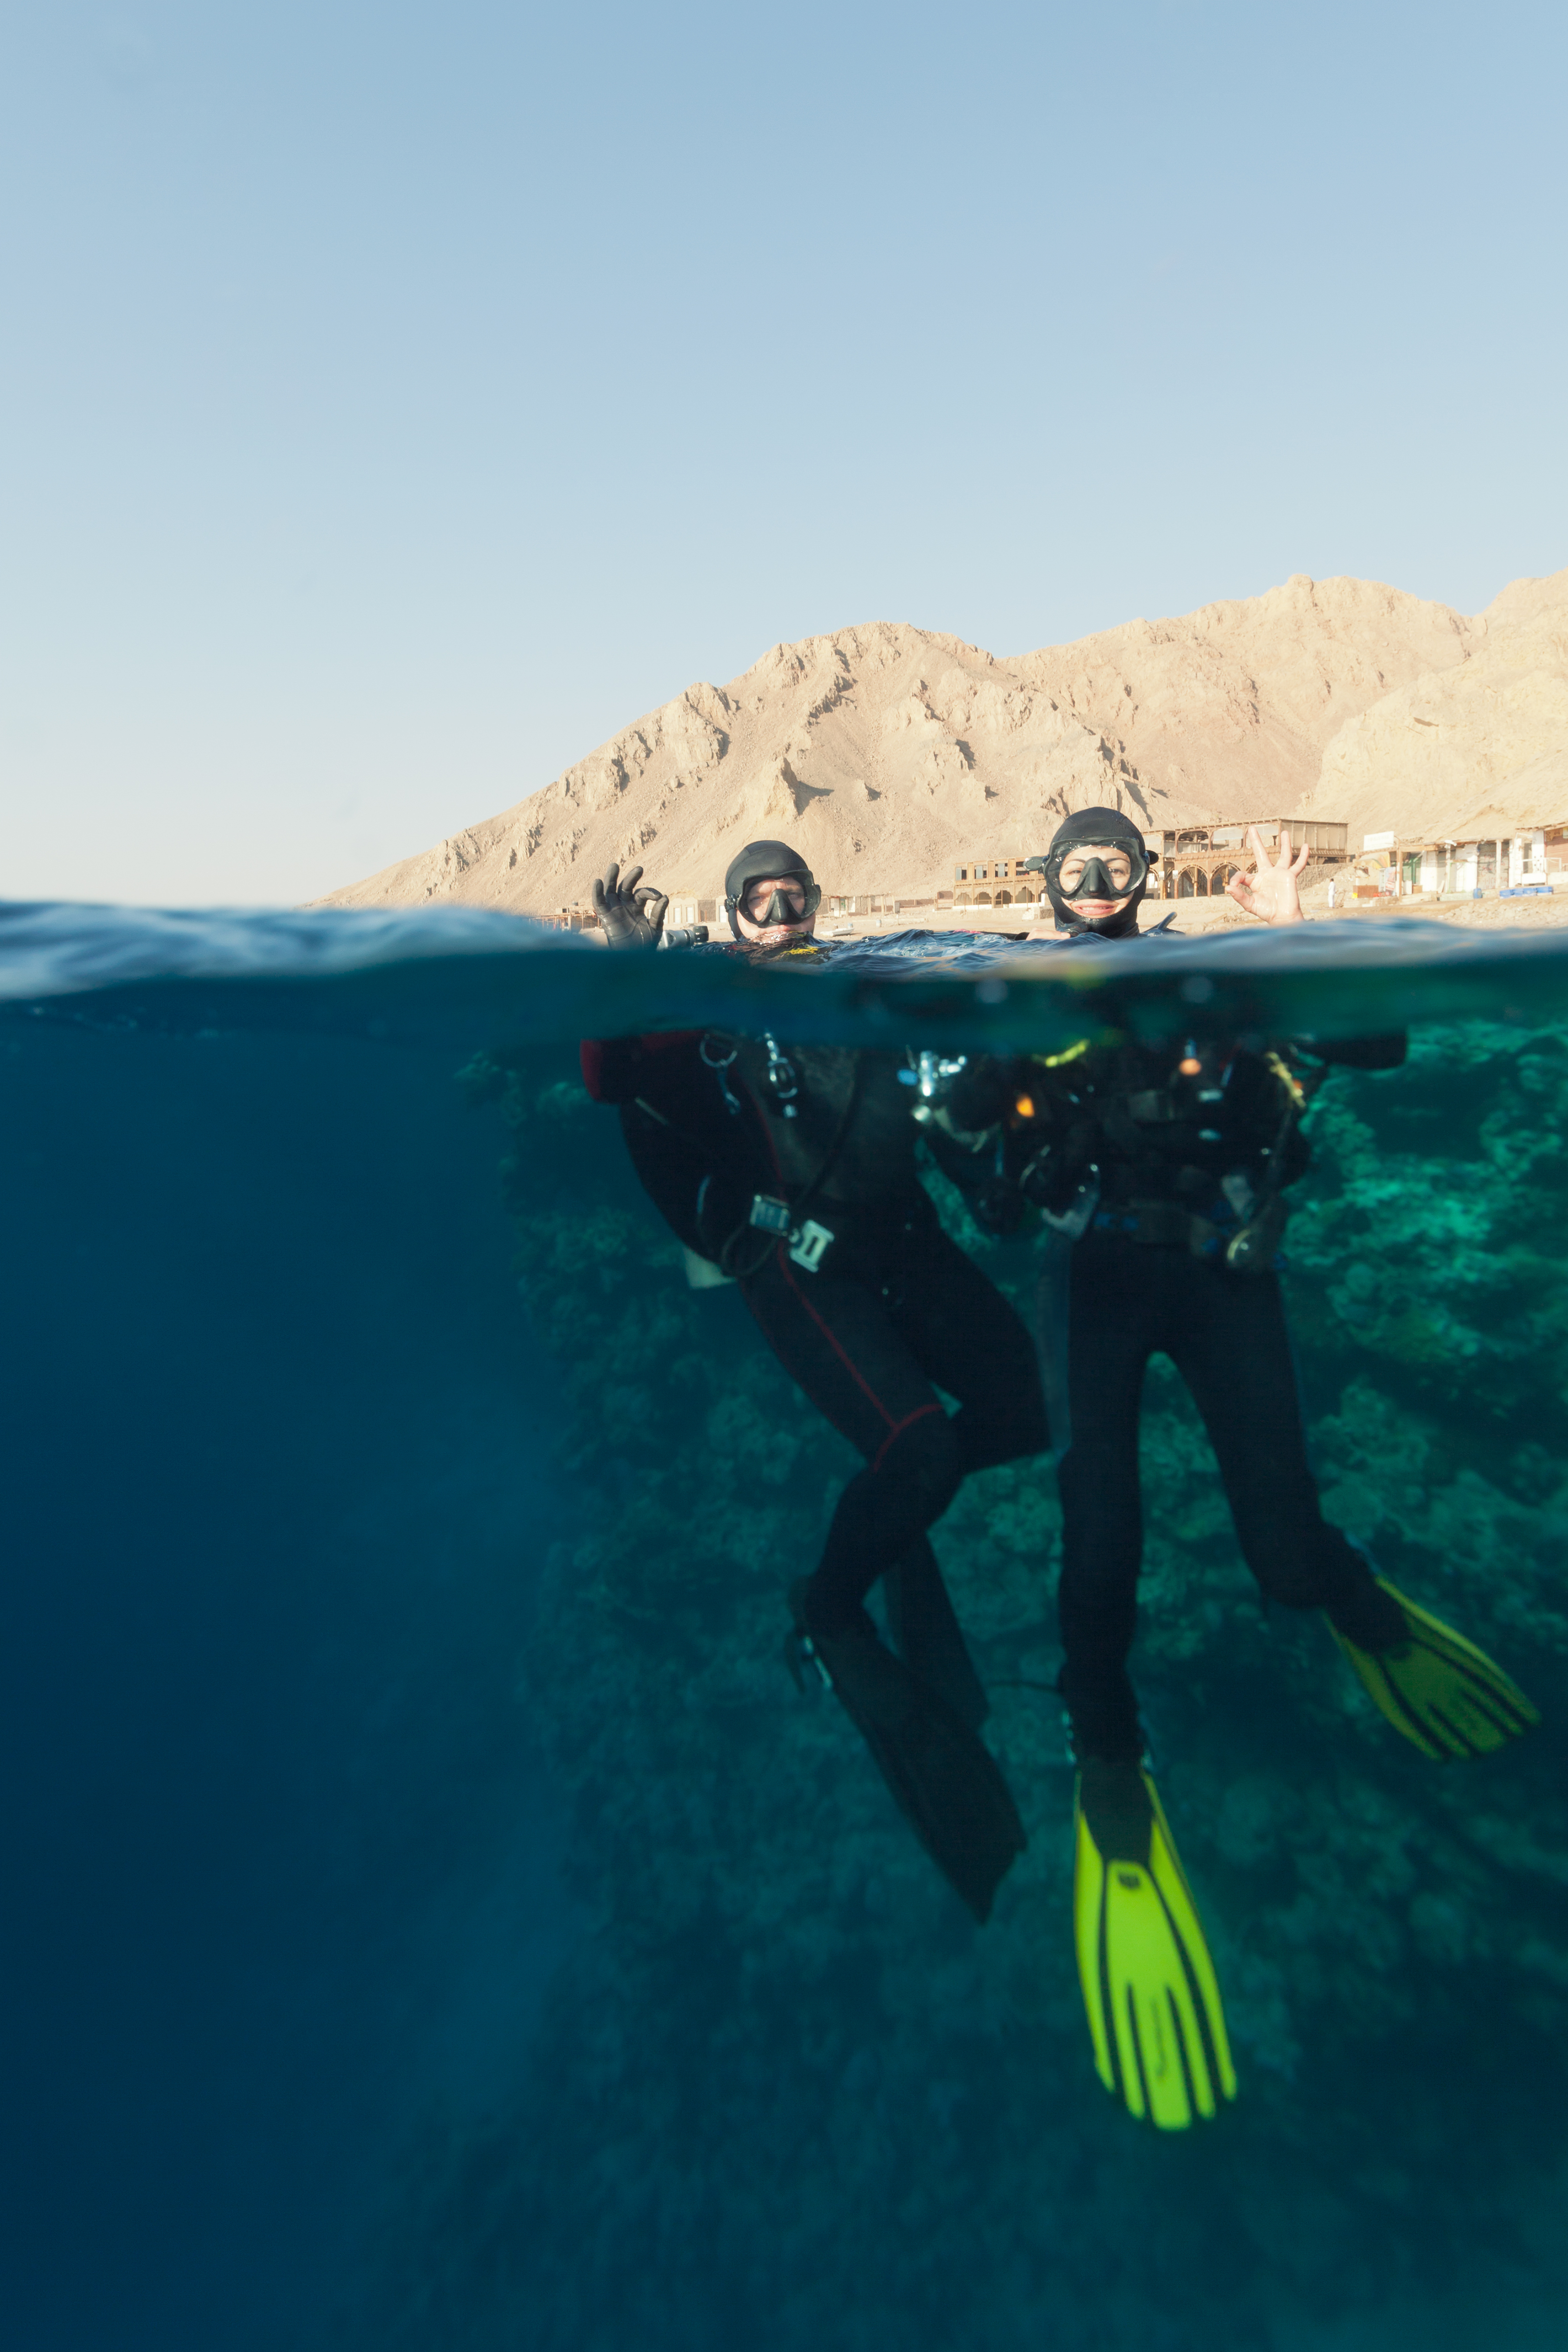 Two divers enjoying altitude diving